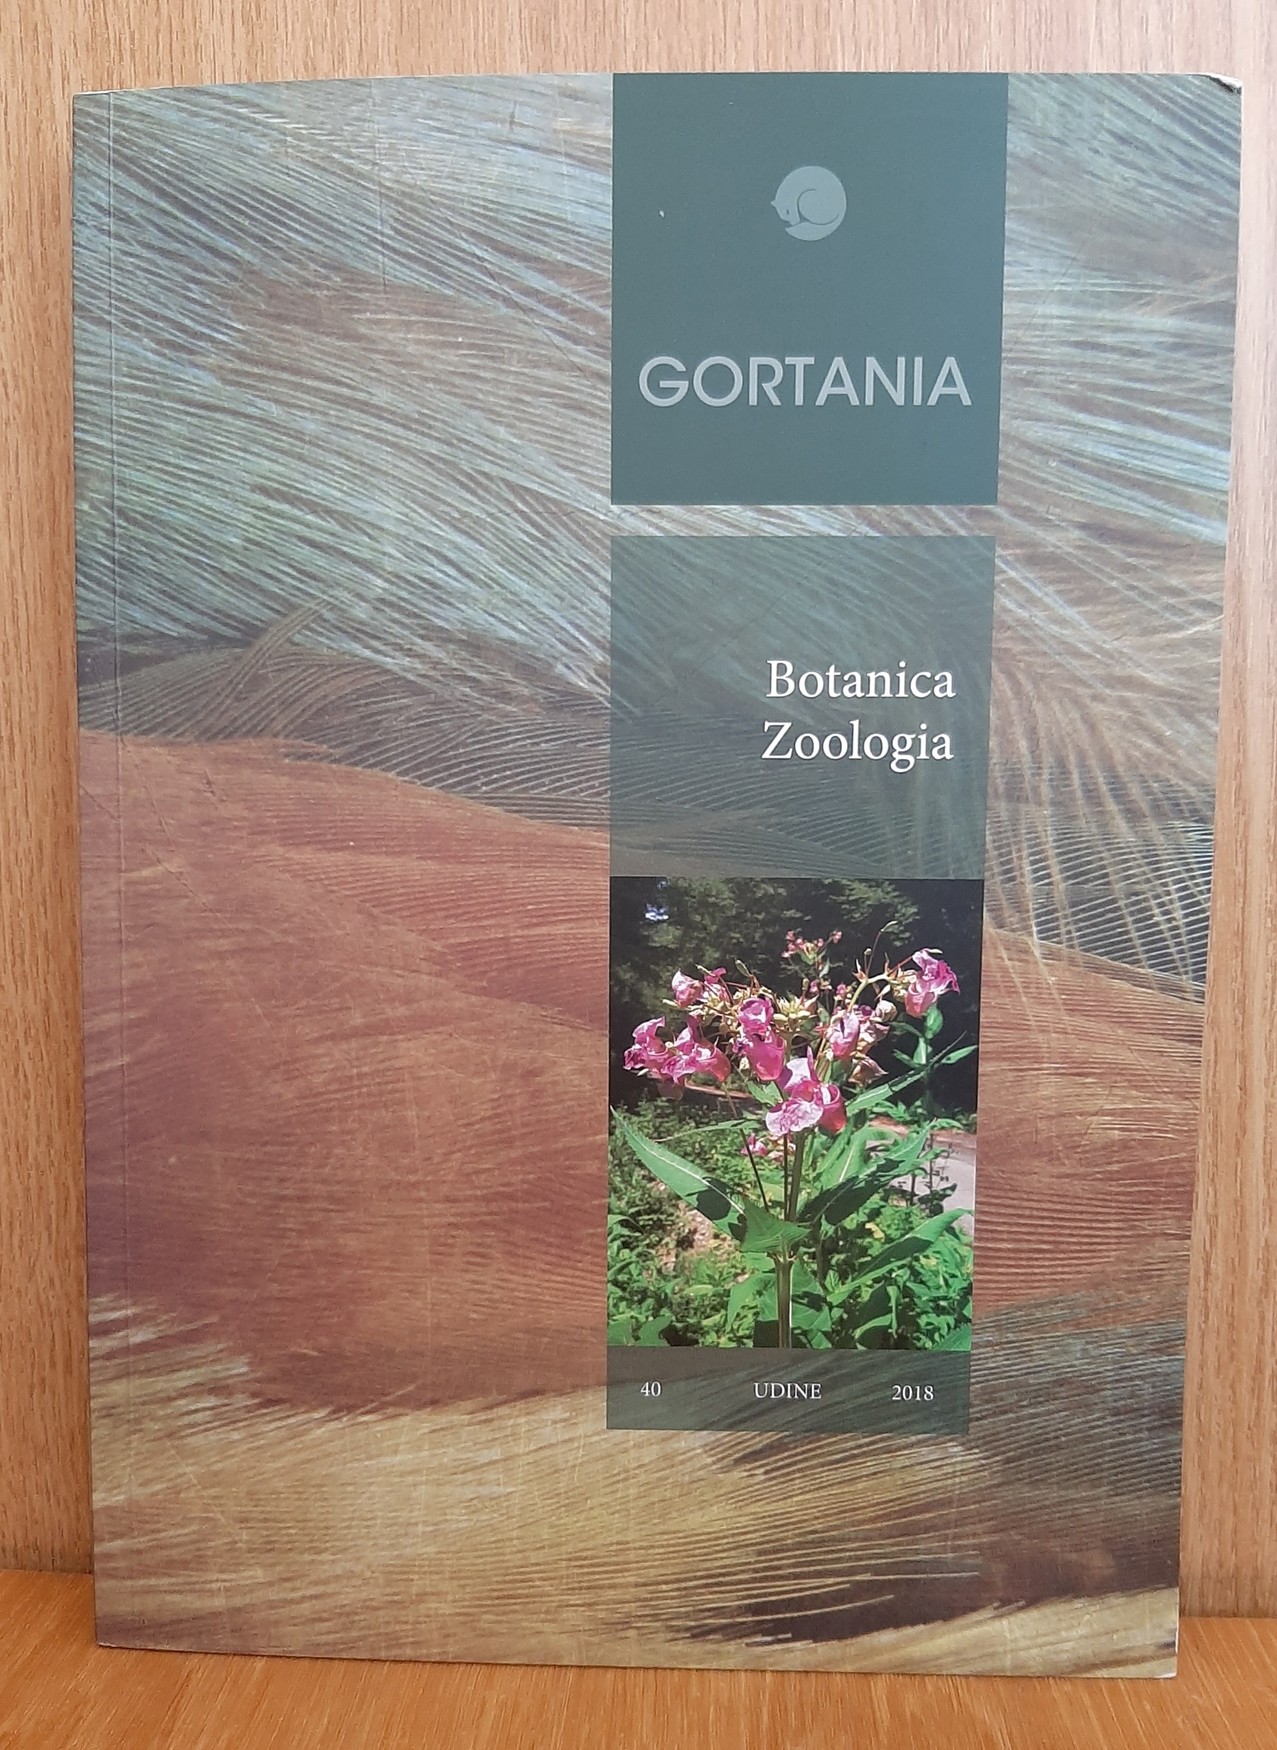 Gortania. Atti del Museo Friulano di Storia Naturale. Botanica, Zoologia 2018/40. (Rippl-Rónai Múzeum CC BY-NC-ND)